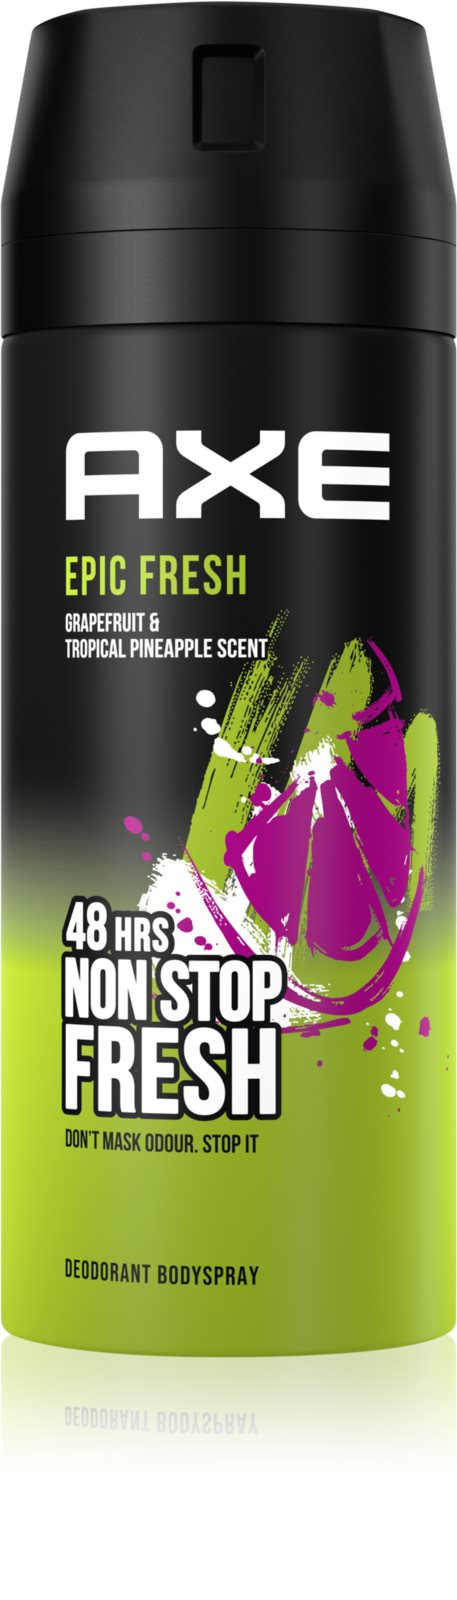 Axe Epic Fresh deodorant 250ml